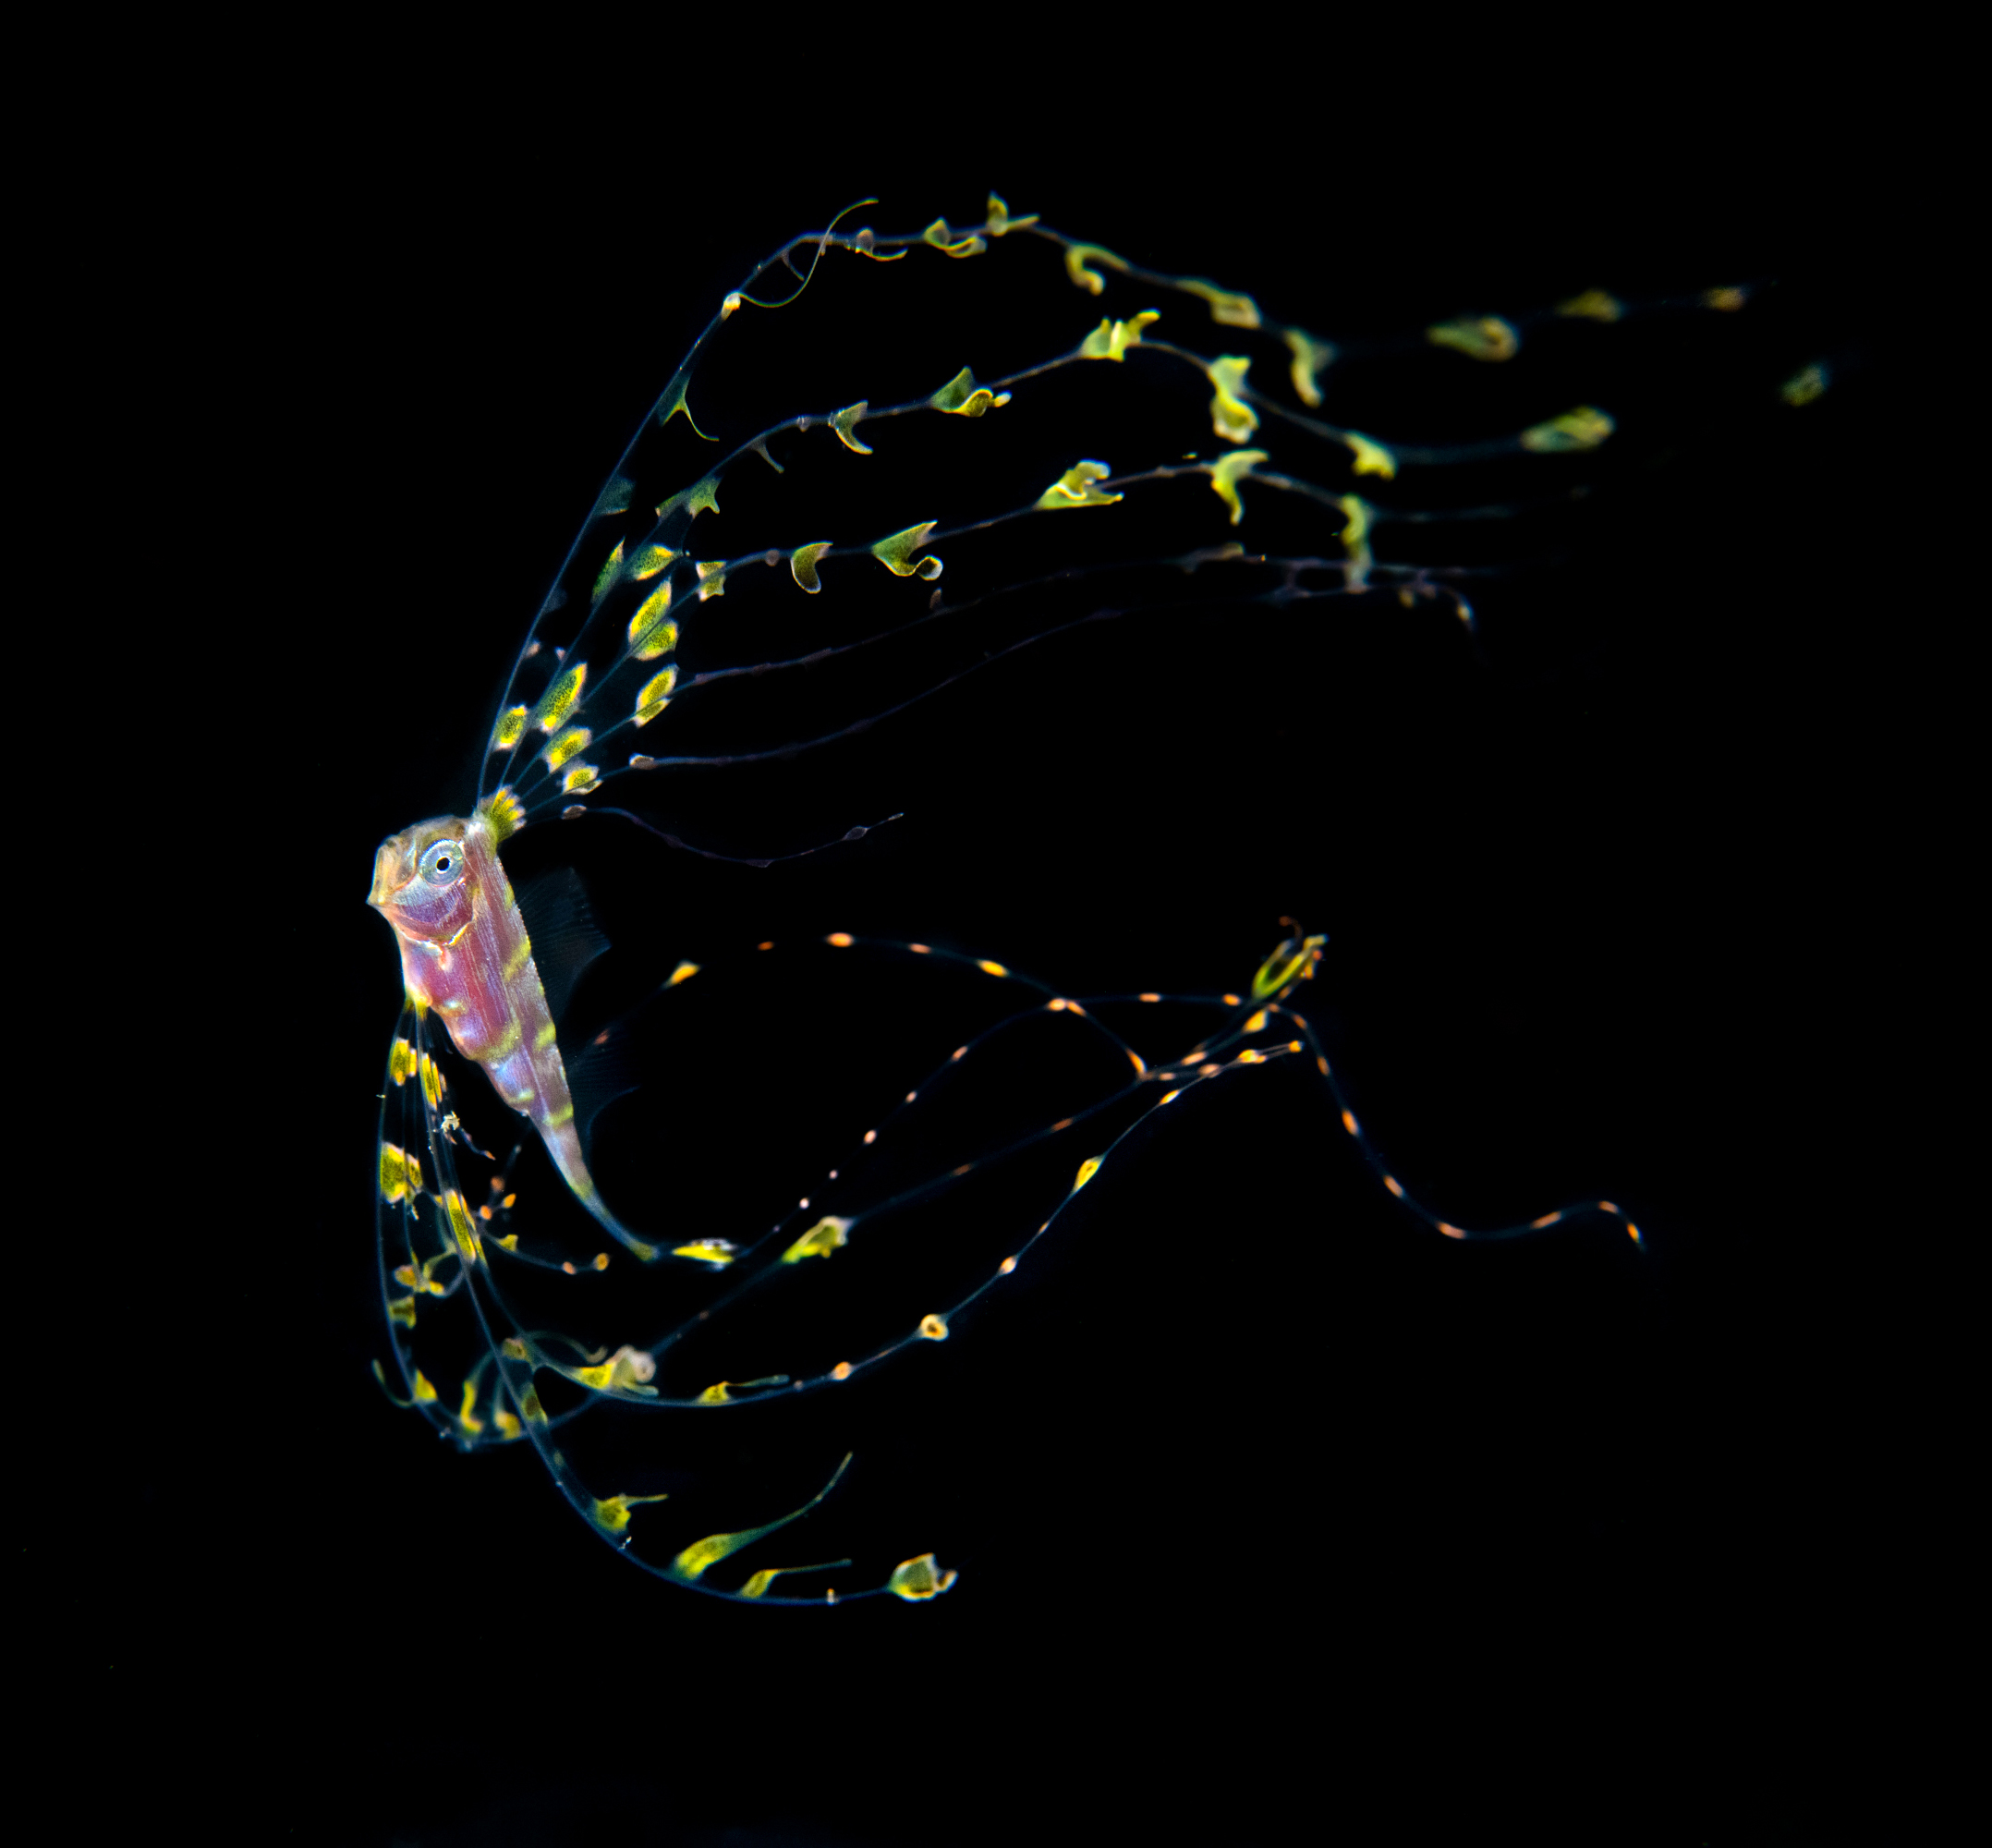 Juvenile ribbonfish by Magnus Lundgren